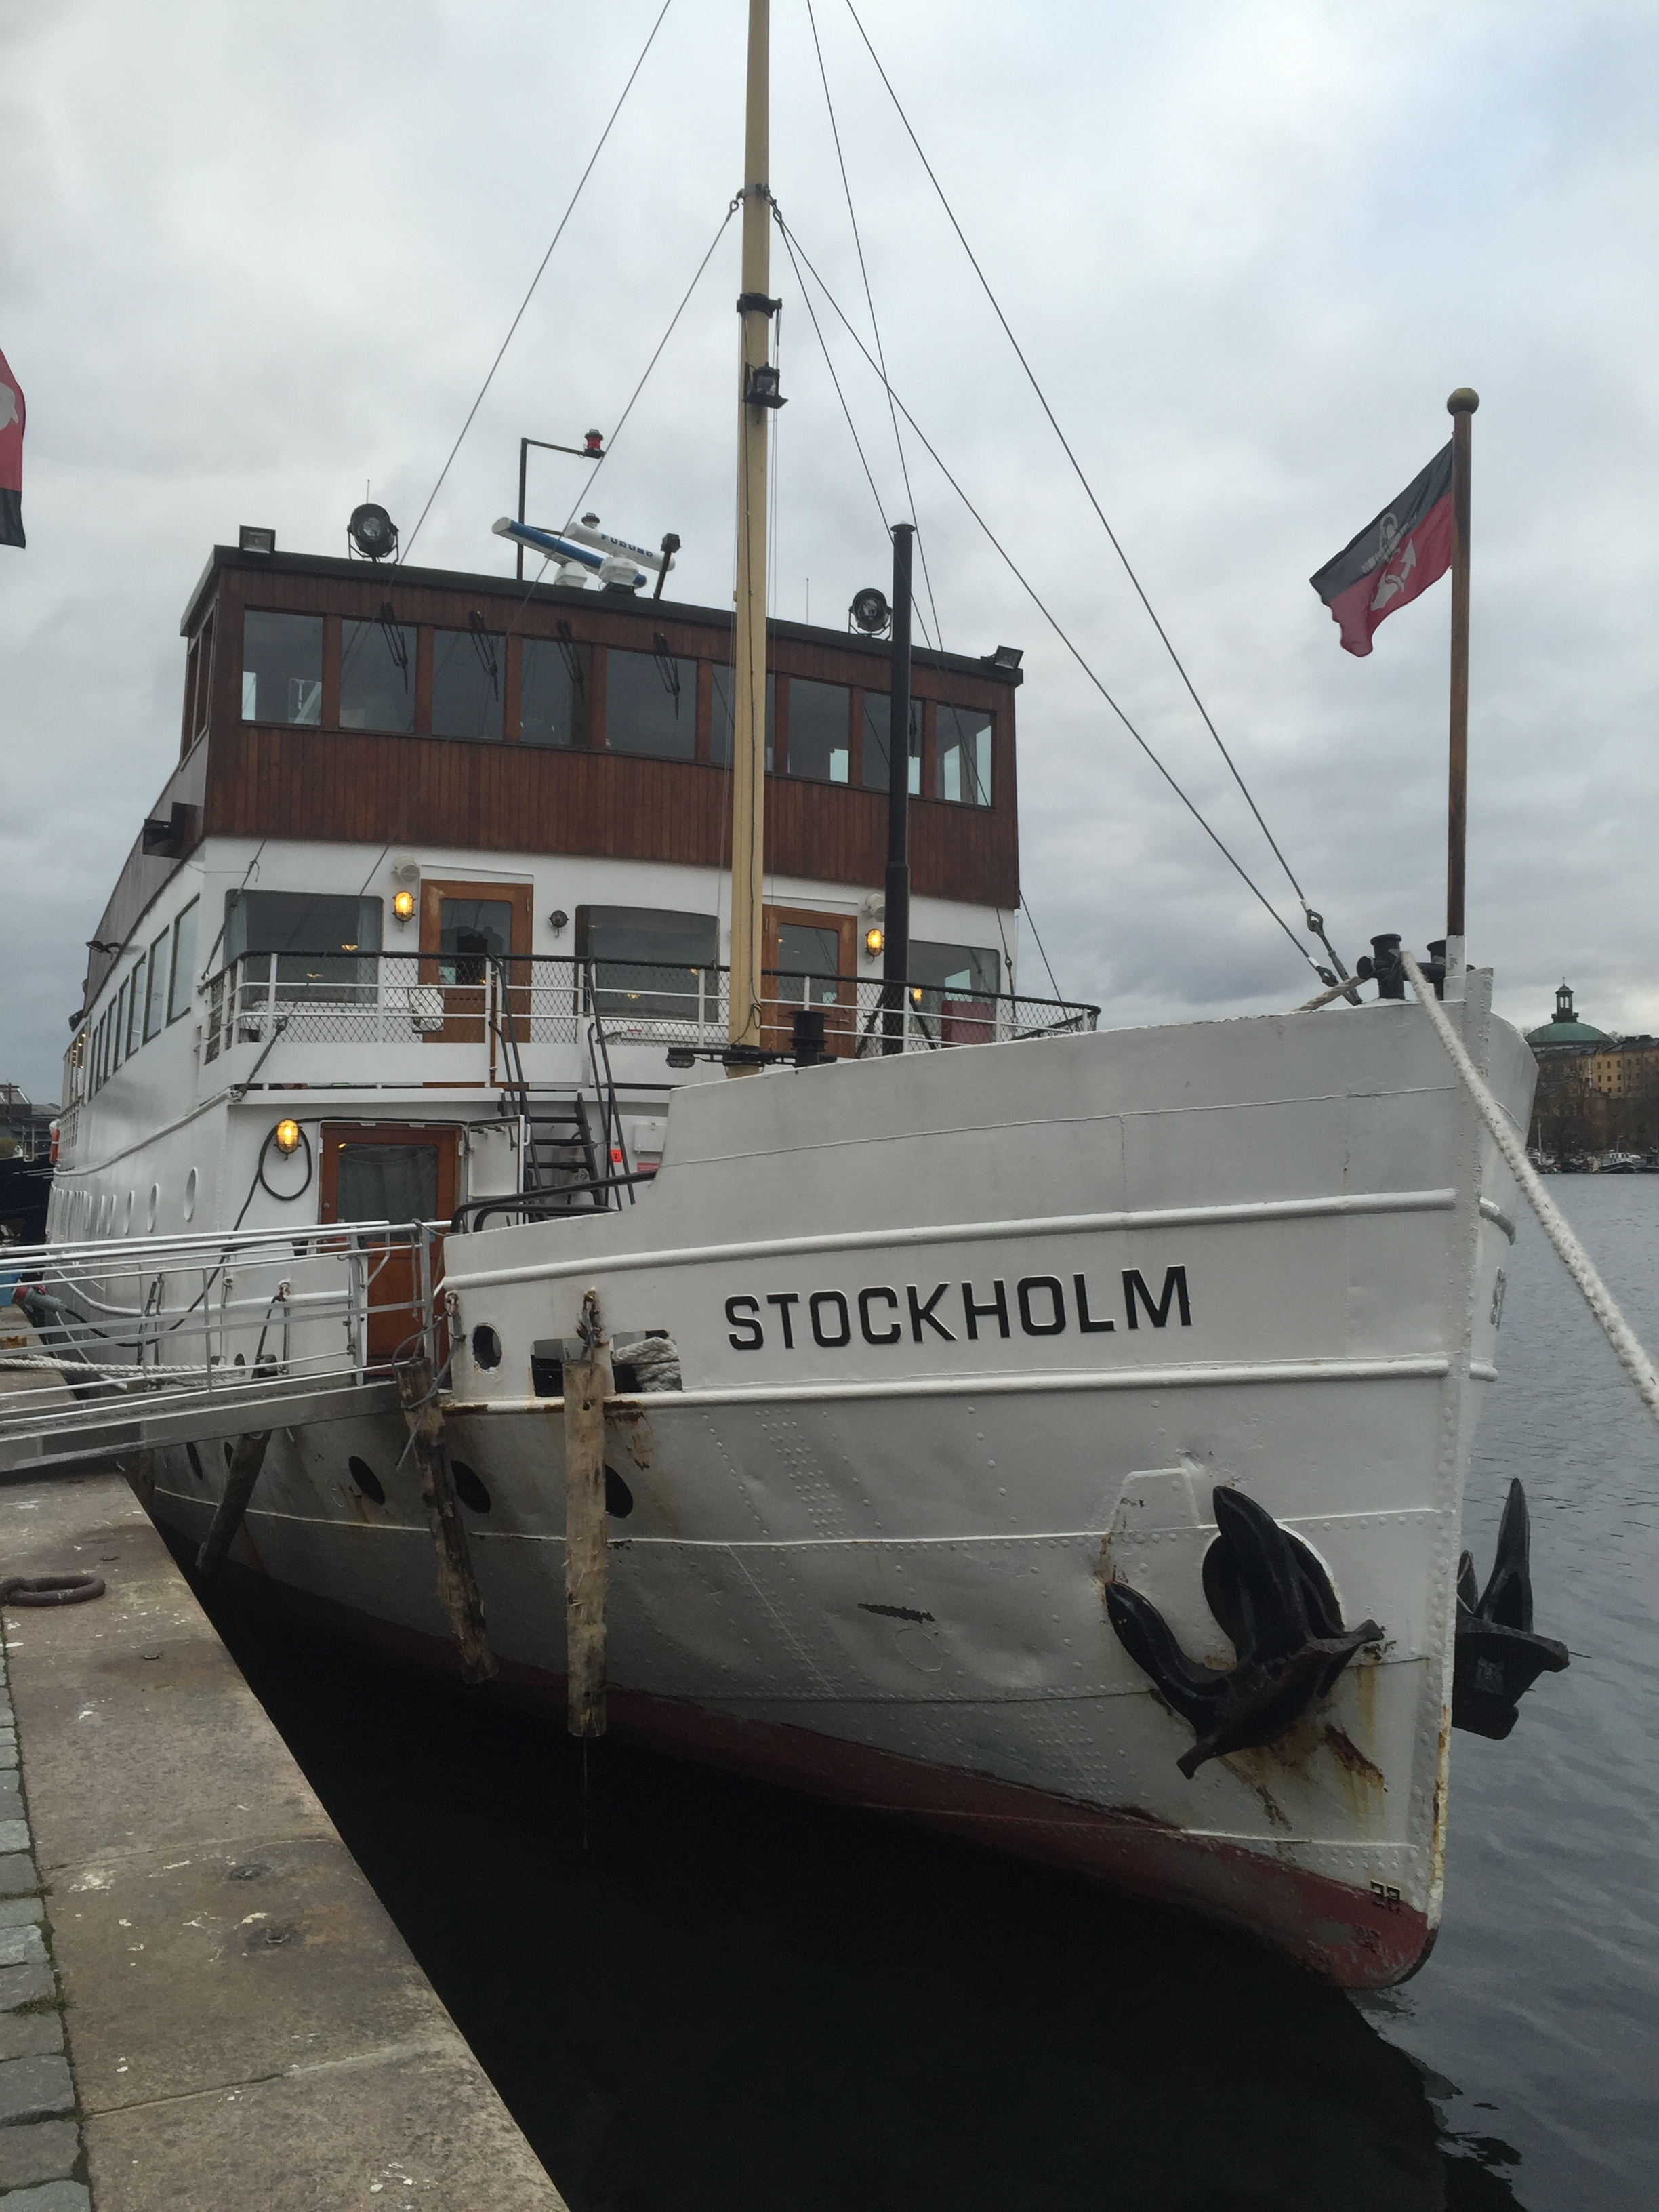 Stockholm Boats    photo by L.D. Van Cleave